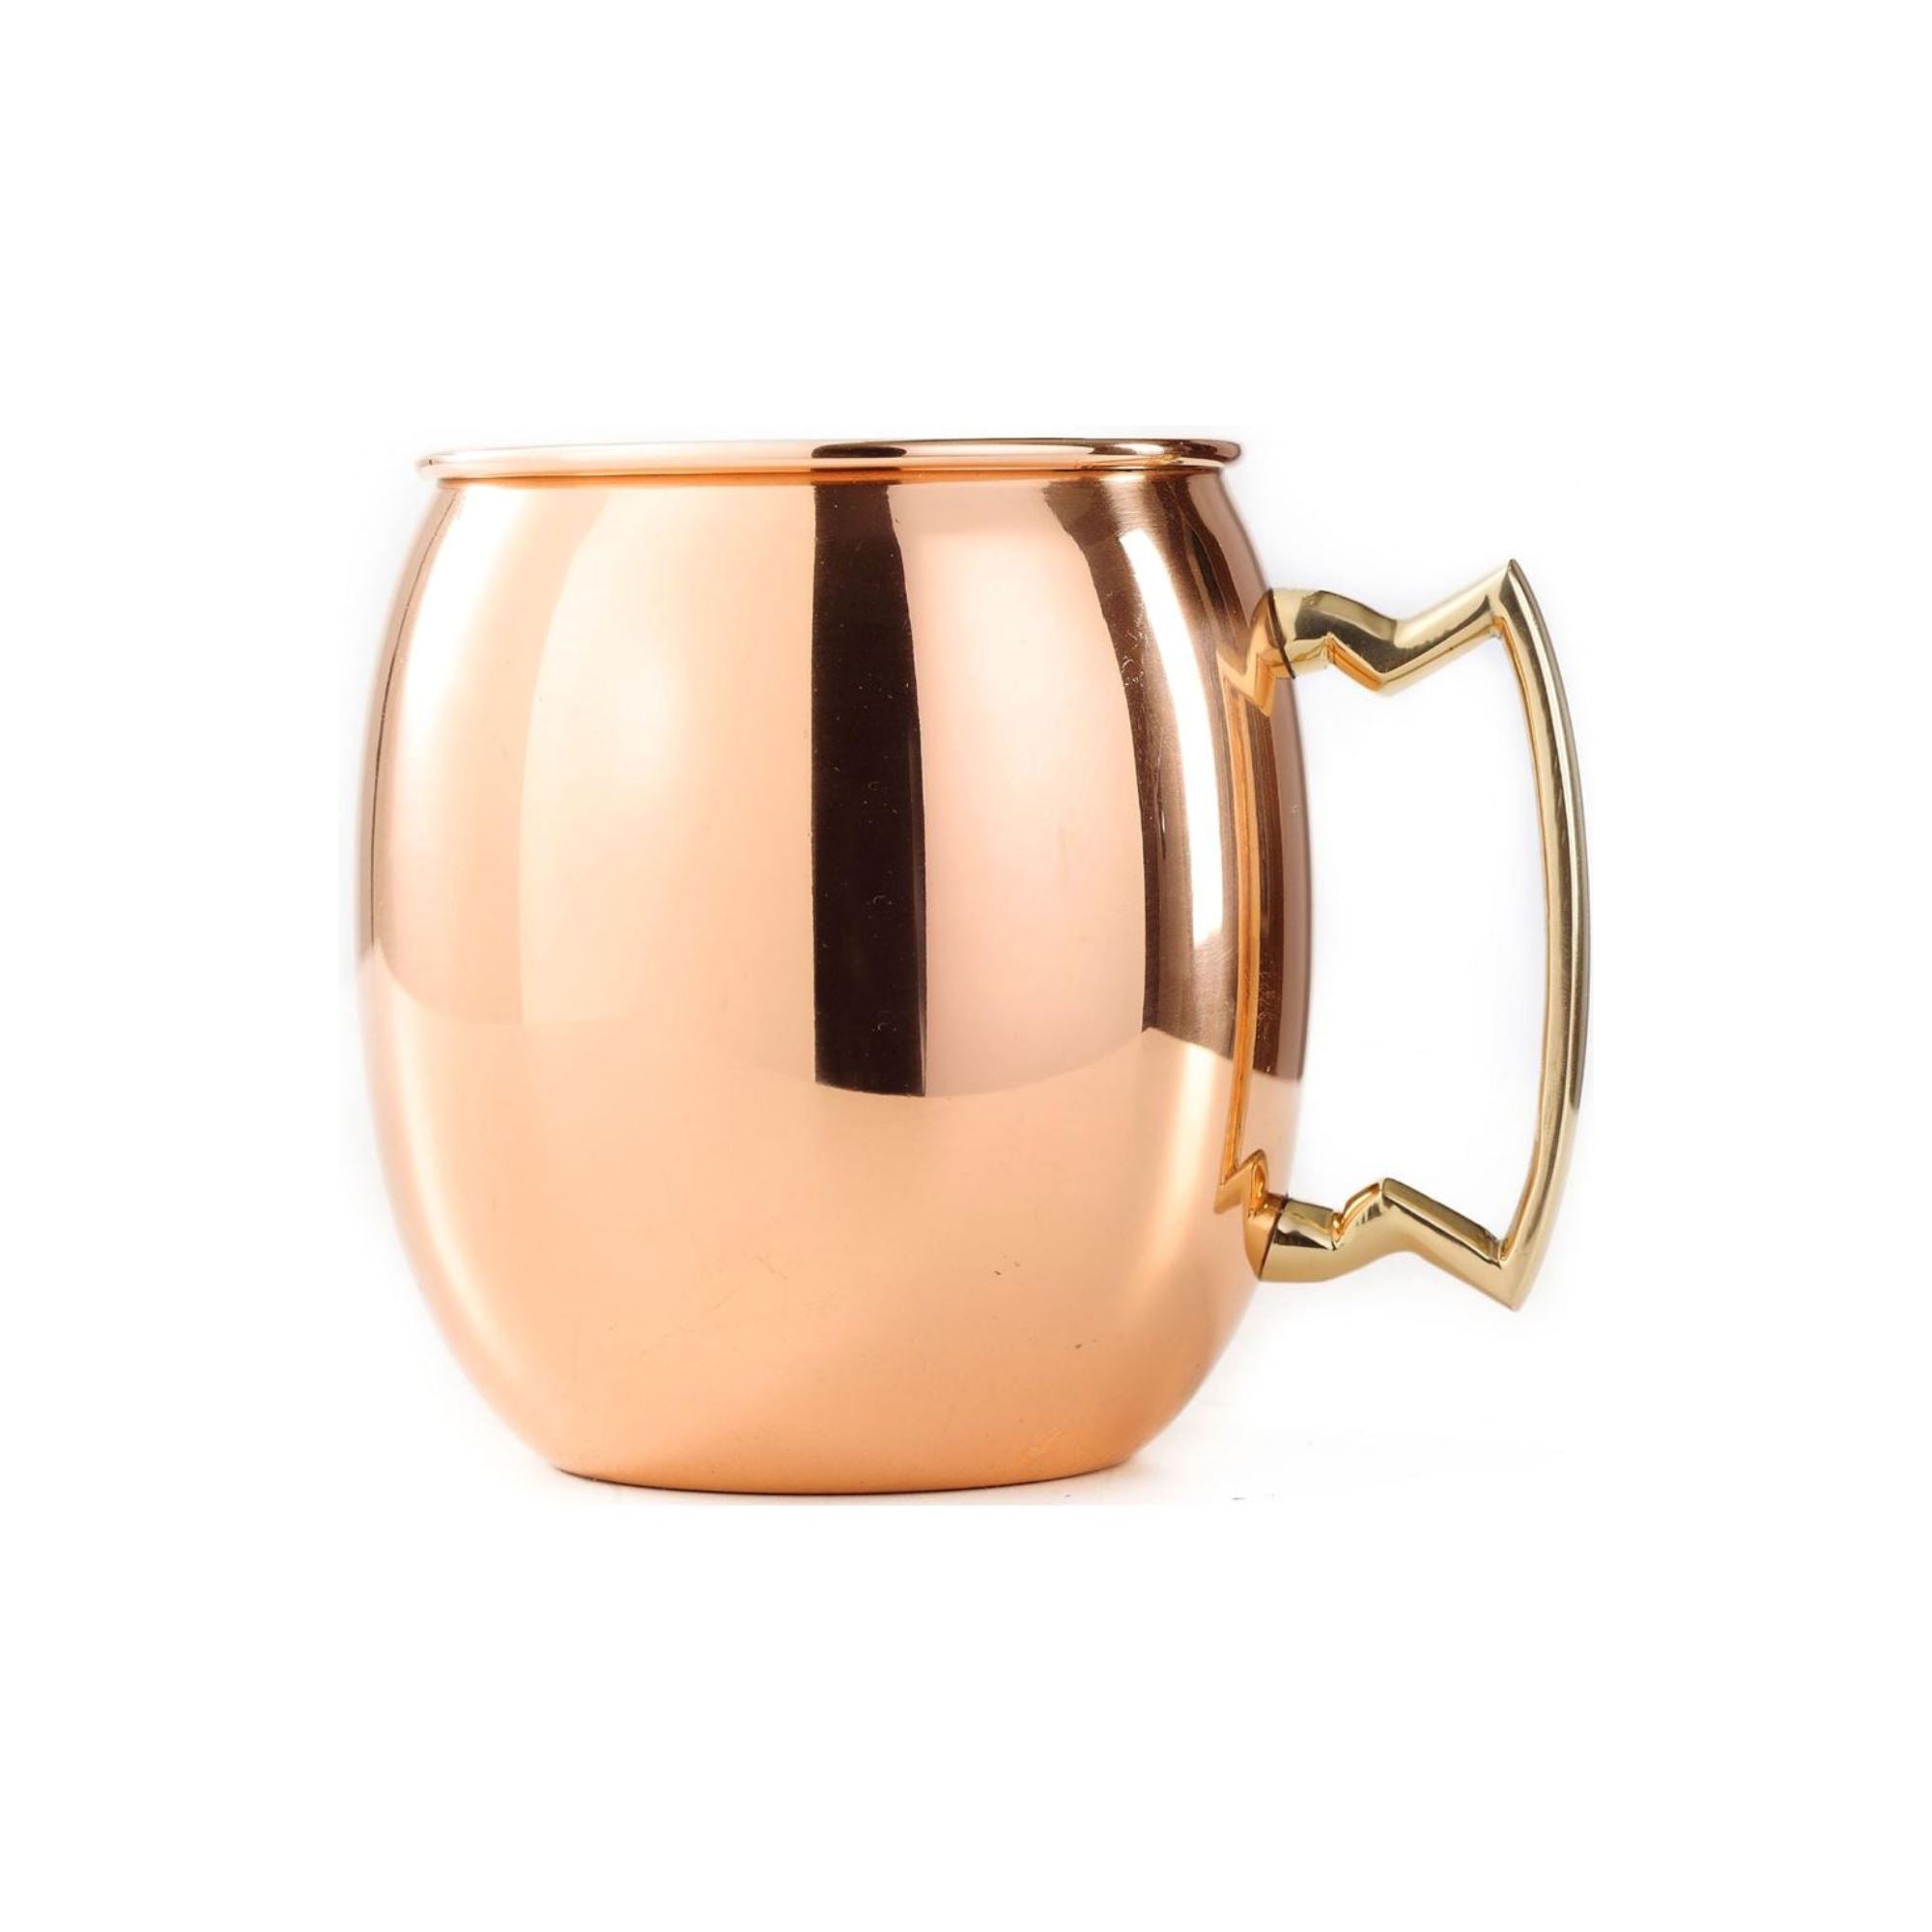 Moscow Mule Copper Plated Mug Mugs D-STILL Drinkware 